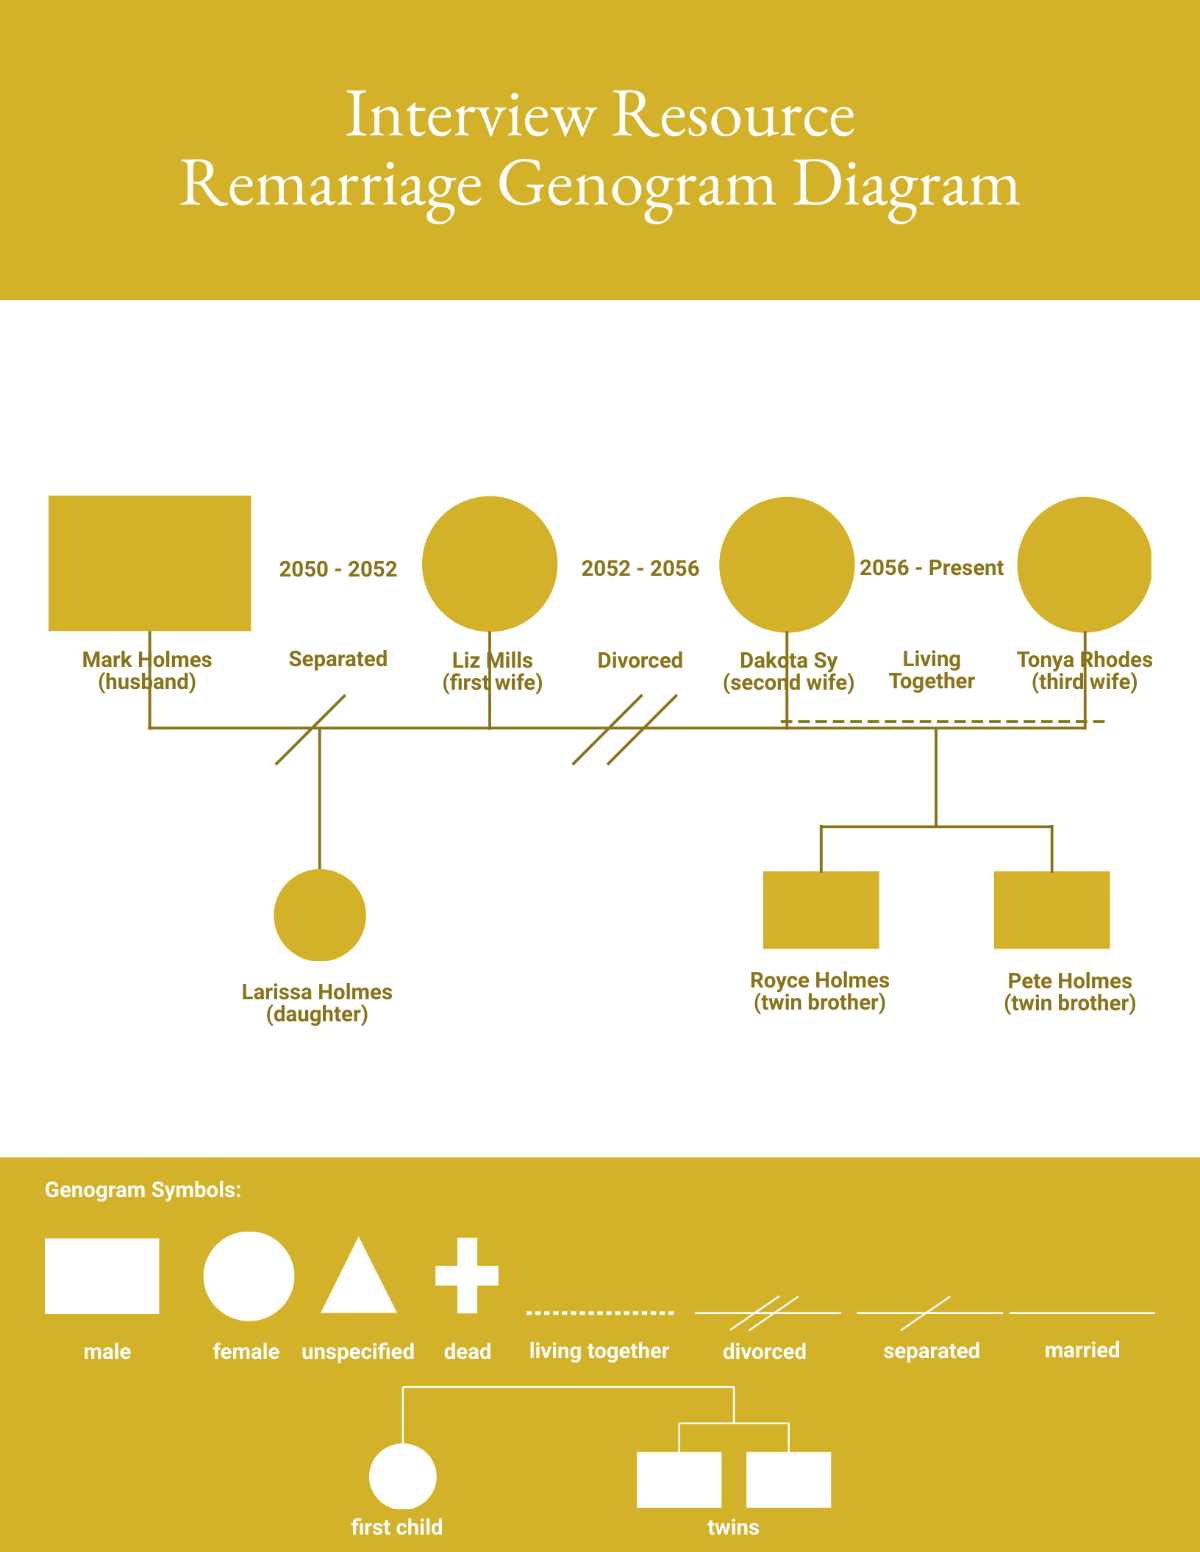 Interview Resource Remarriage Genogram Diagram Template